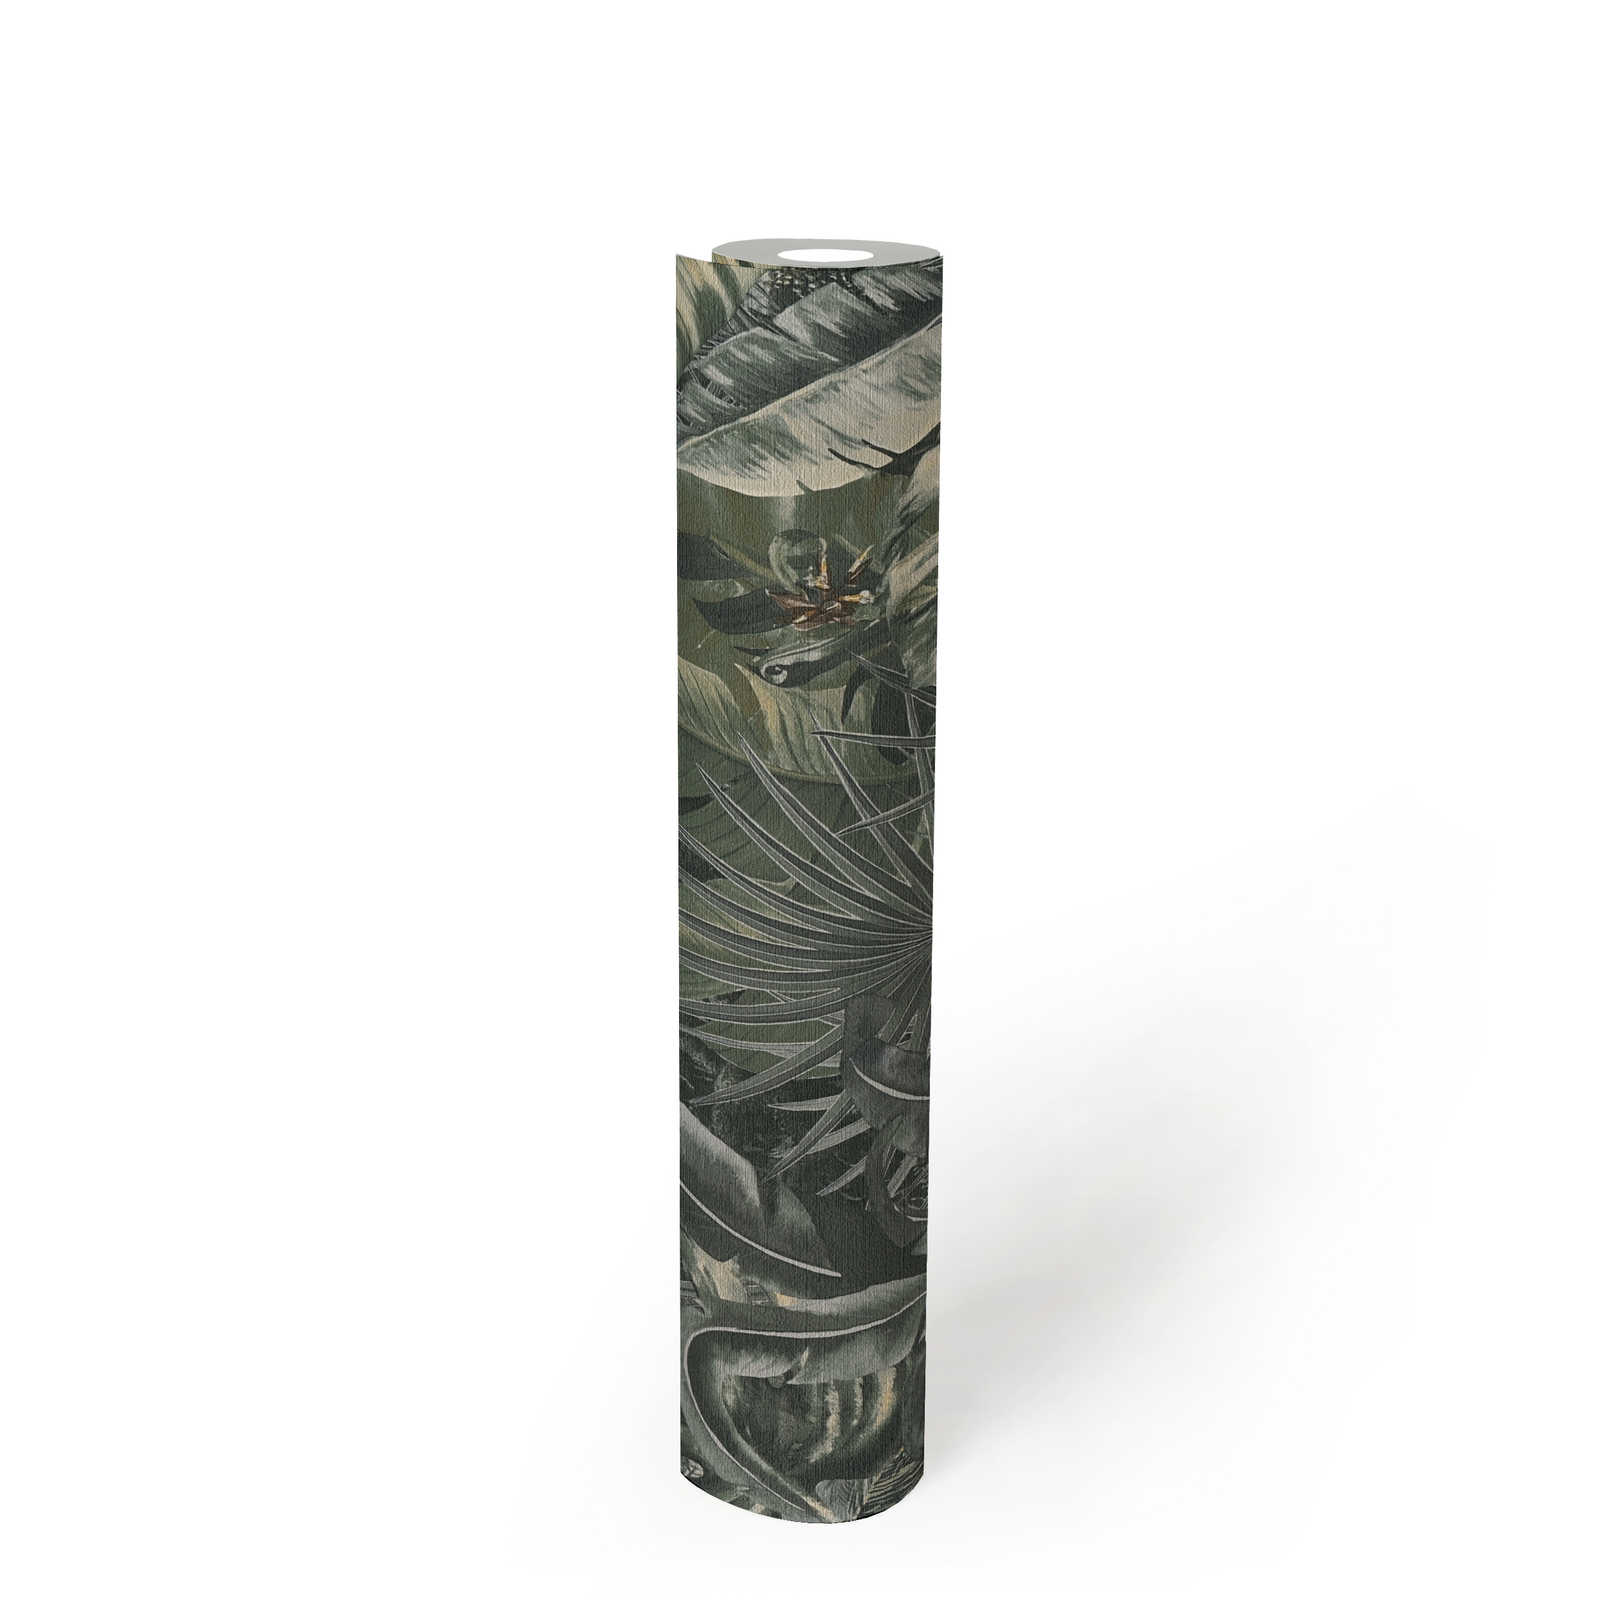             Papier peint motif jungle, style colonial moderne - Vert
        